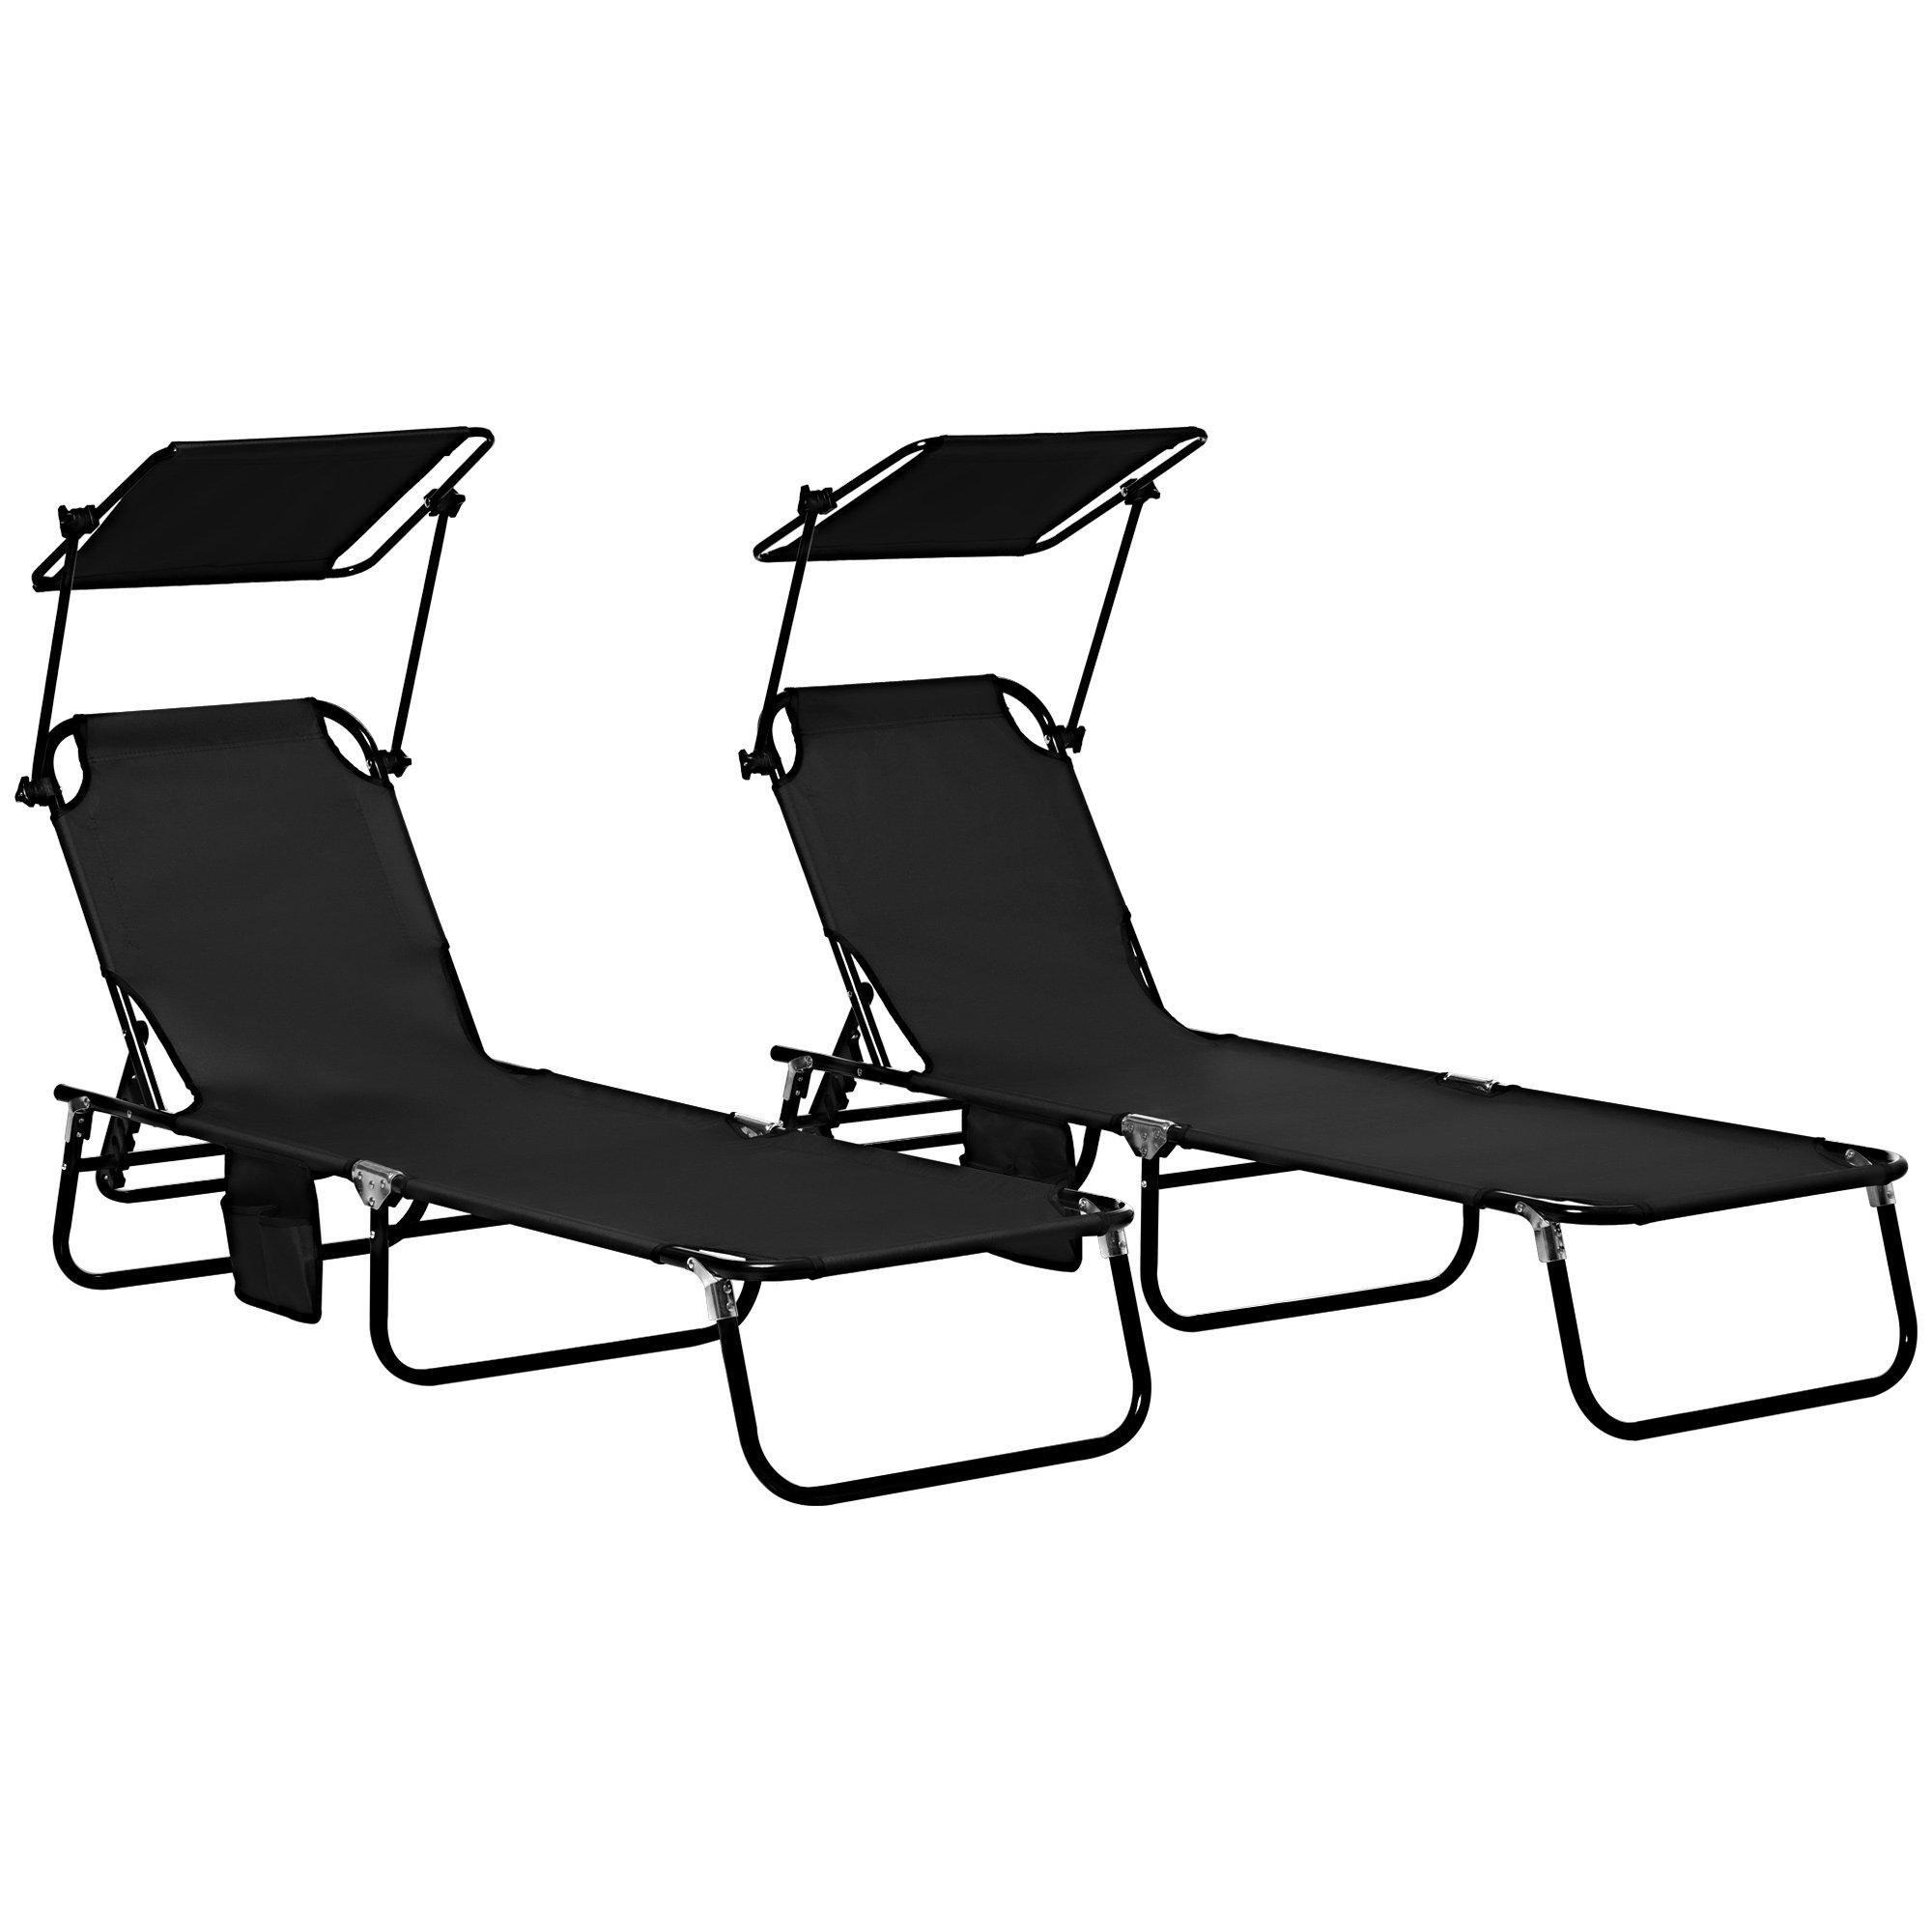 2 Piece Folding Sun Loungers with Adjustable Backrest, Sunshade, Black - image 1